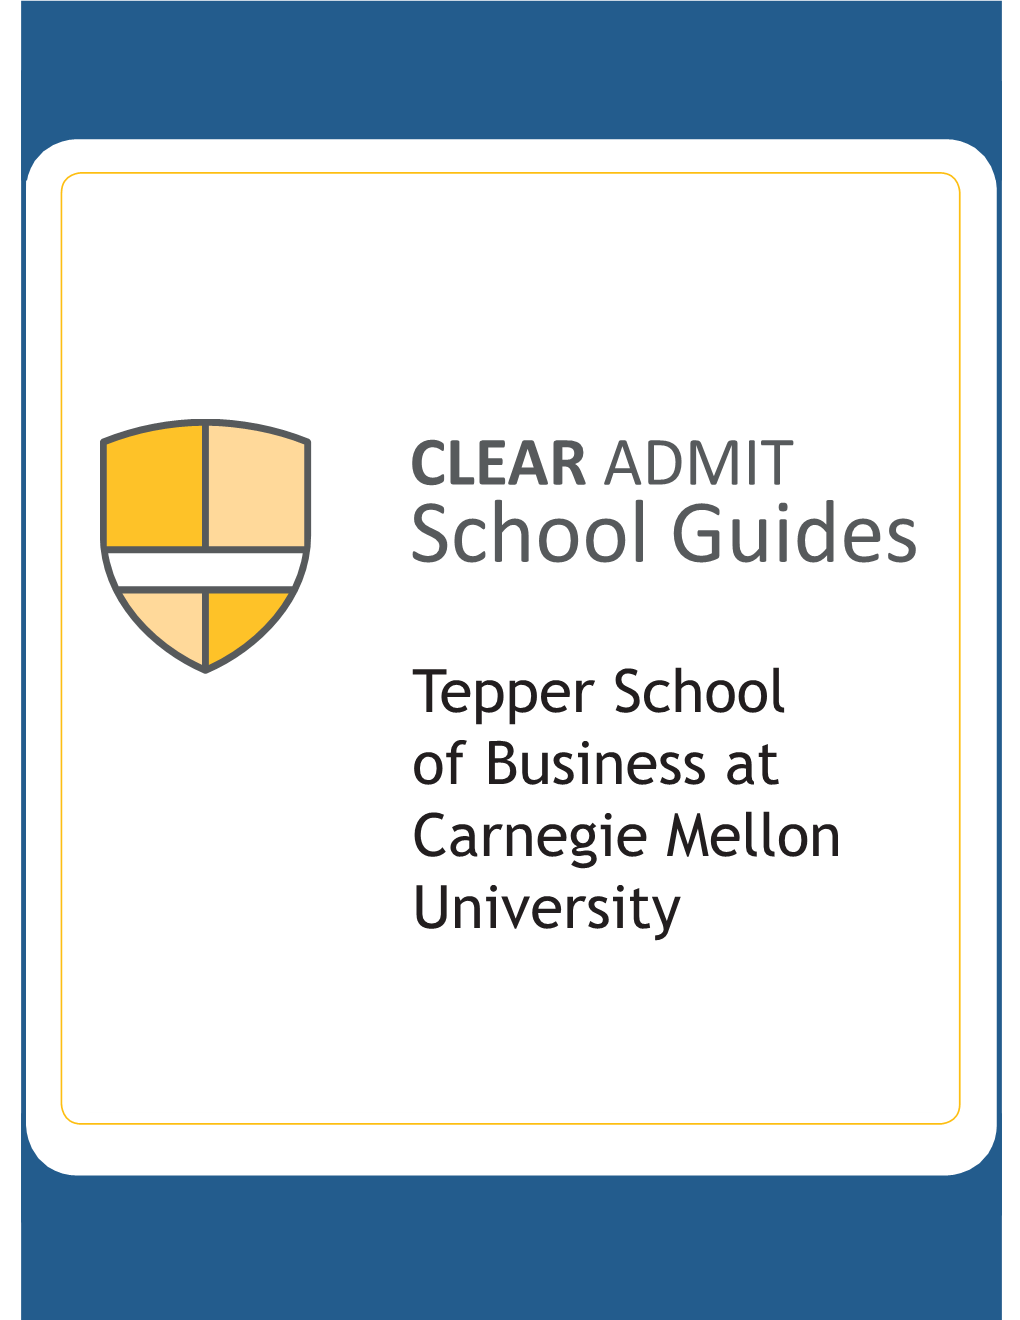 Tepper School of Business at Carnegie Mellon University